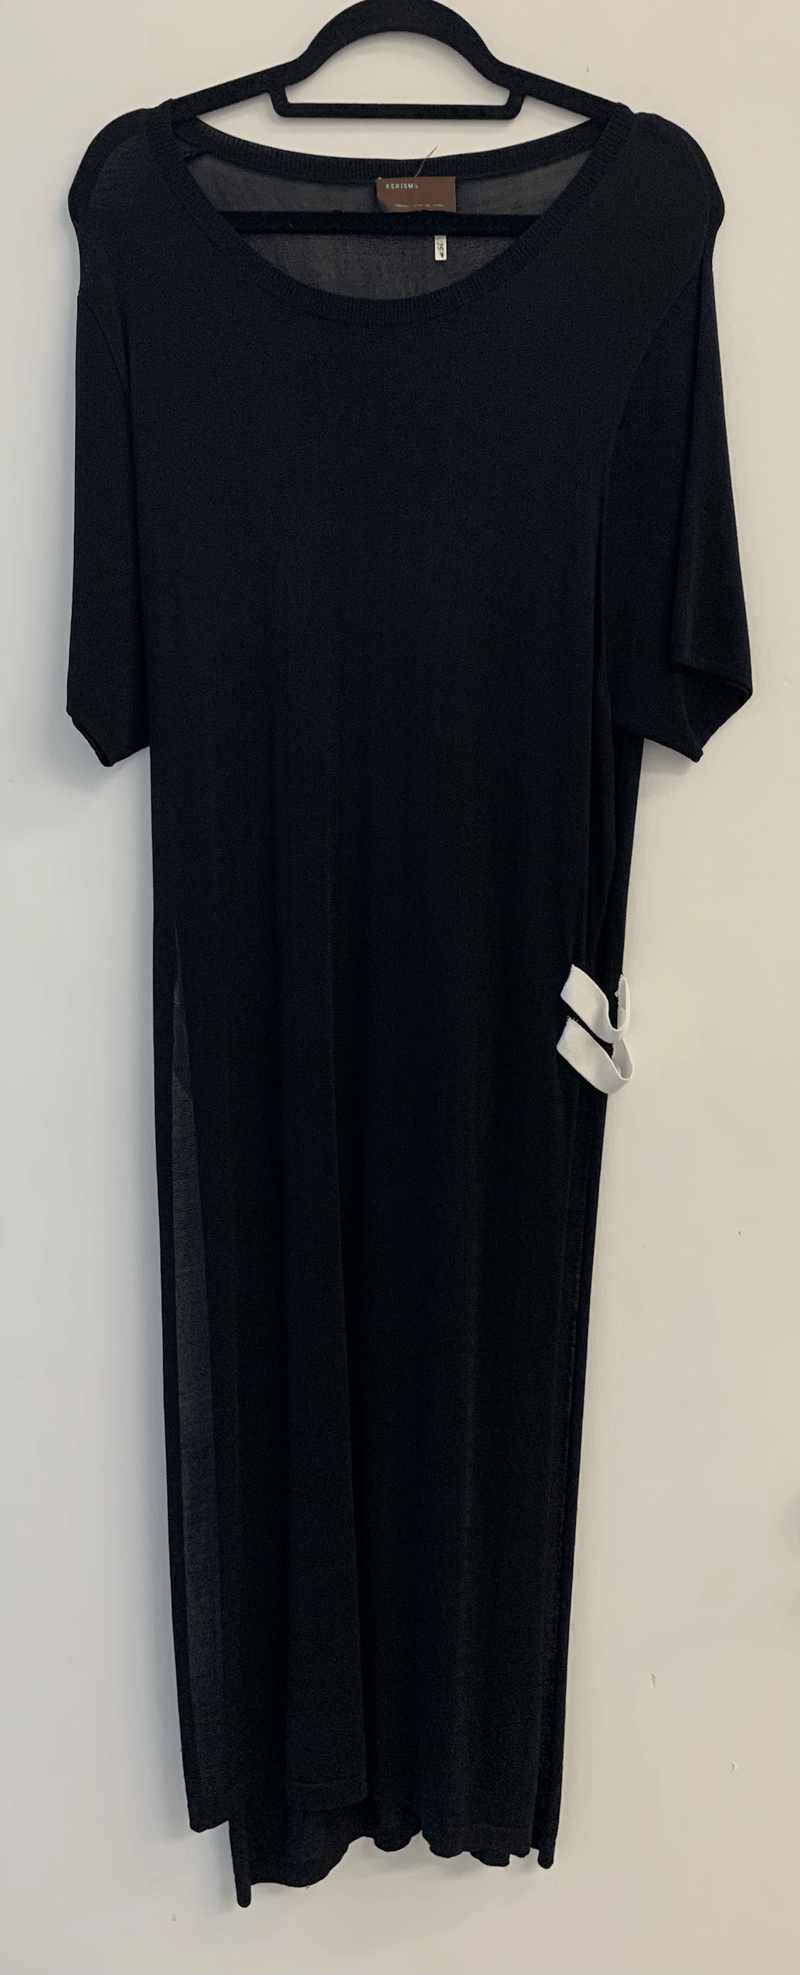 Kerisma Black Dress #M3072